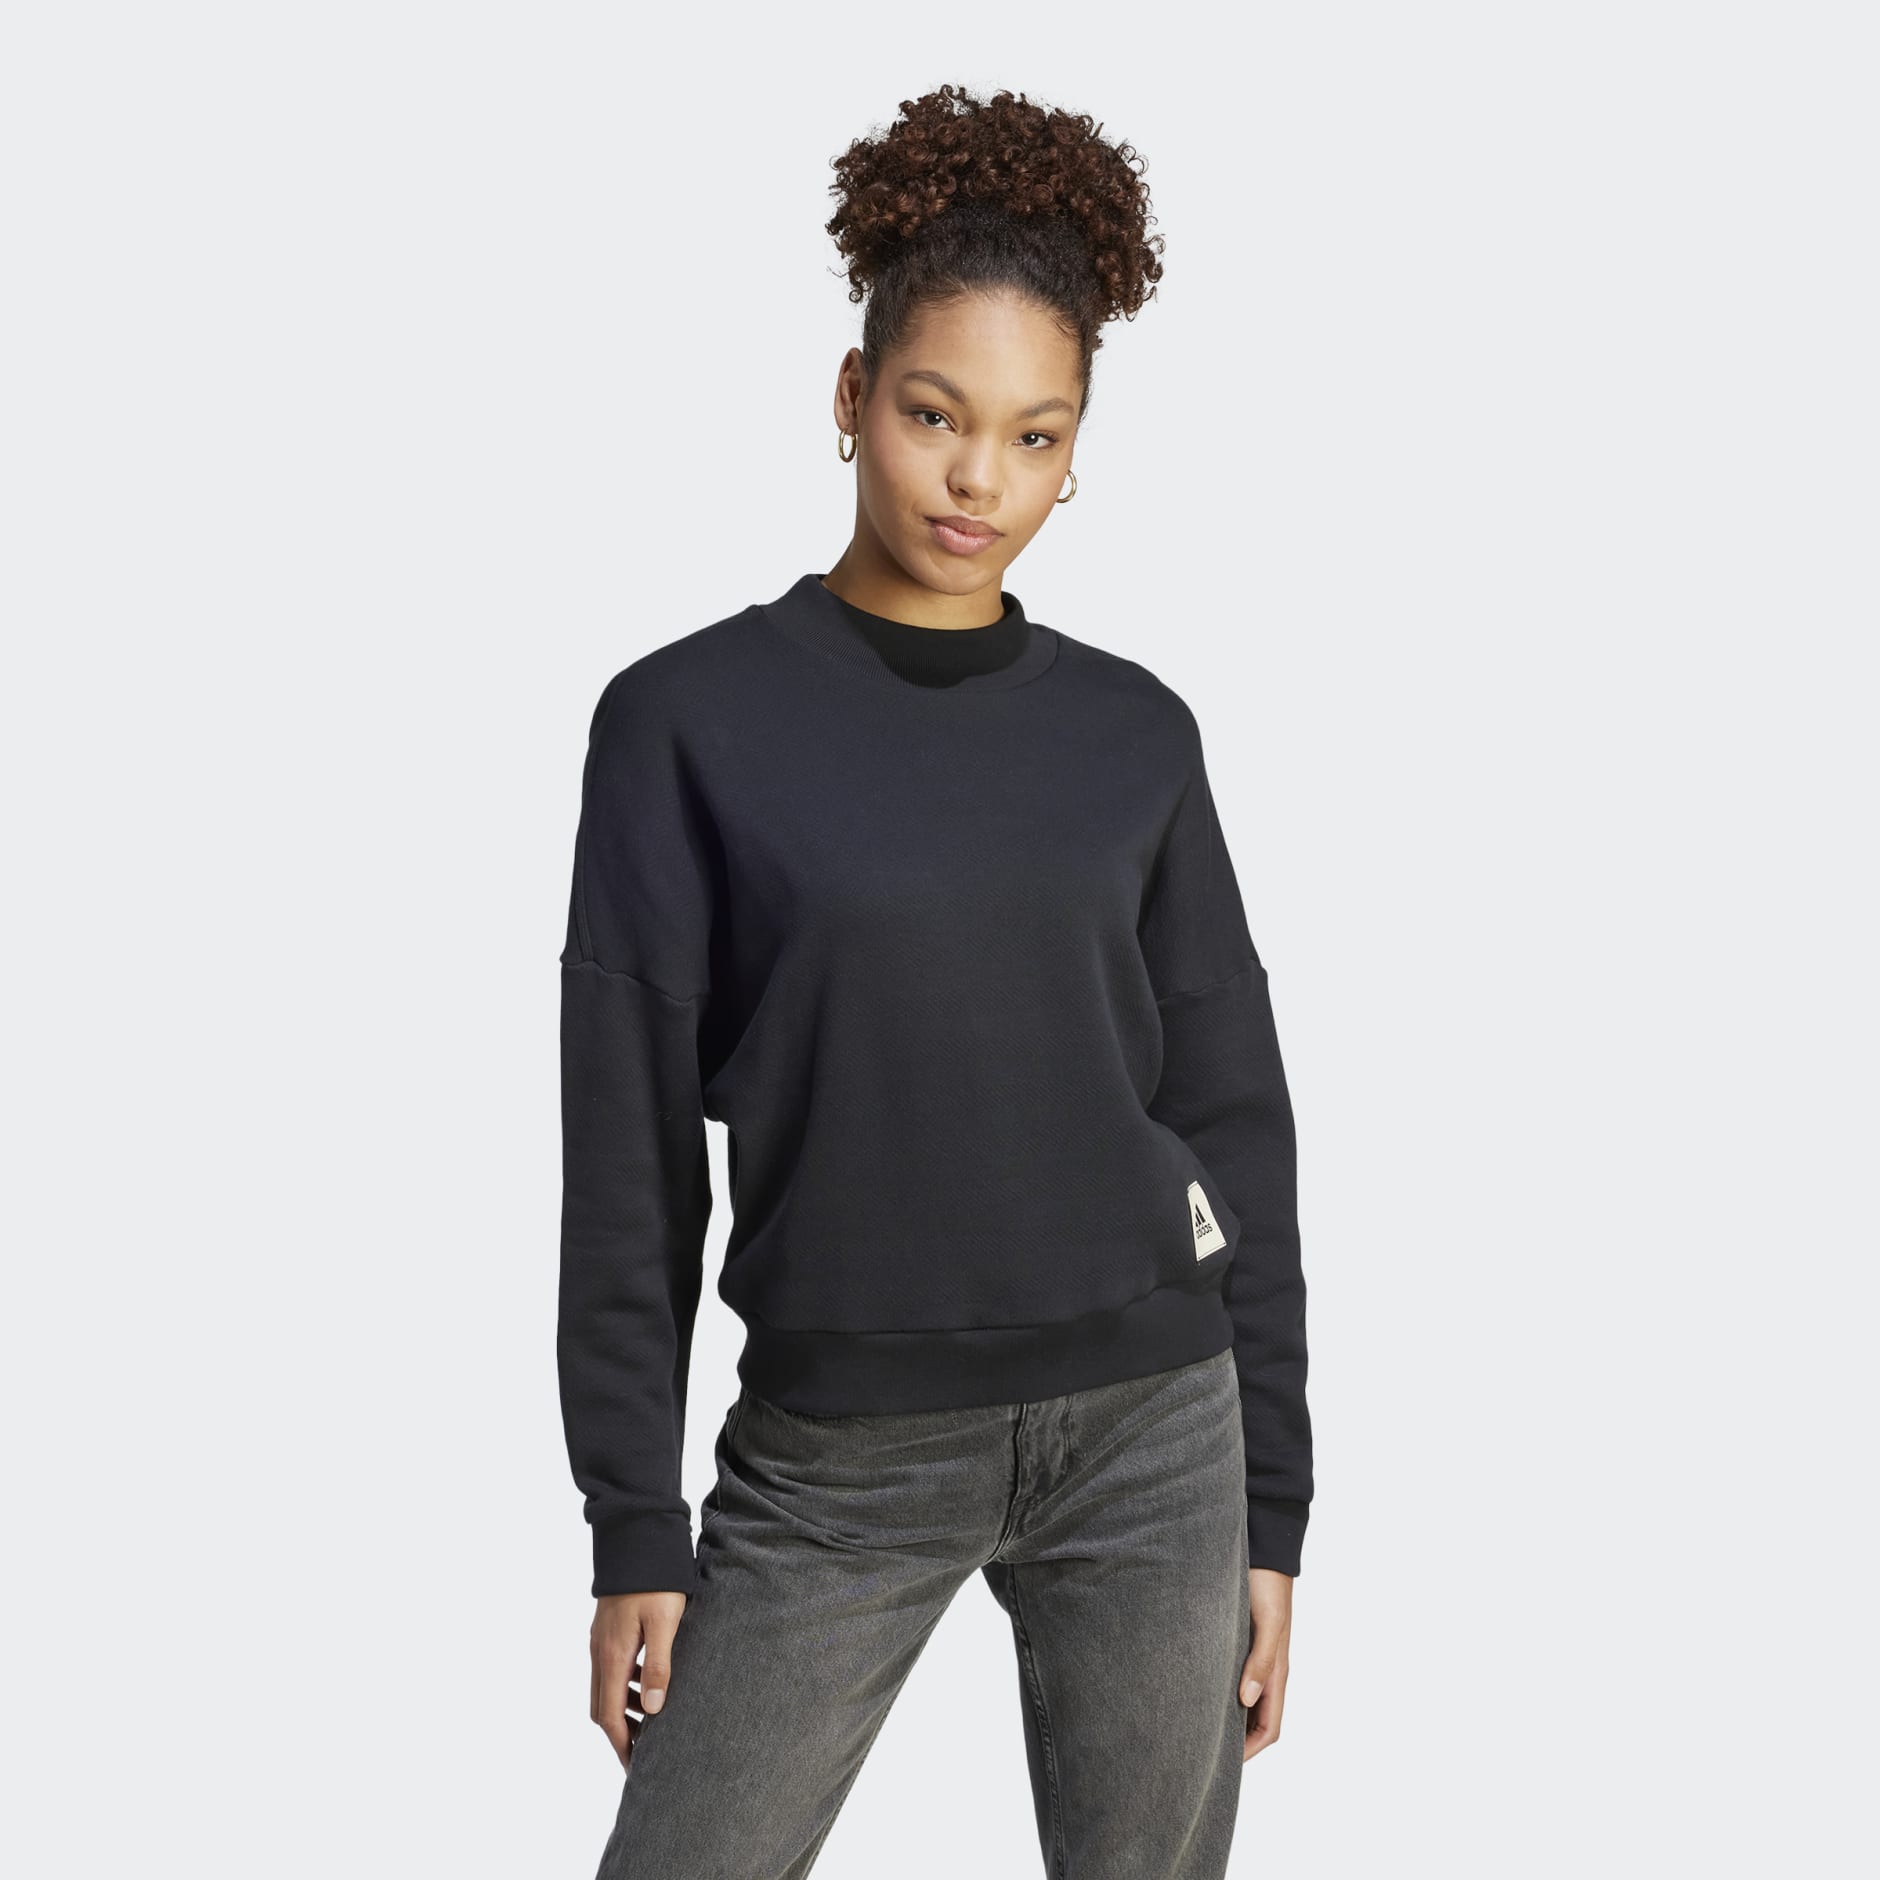 Women's Clothing - Lounge French Terry Sweatshirt - Black